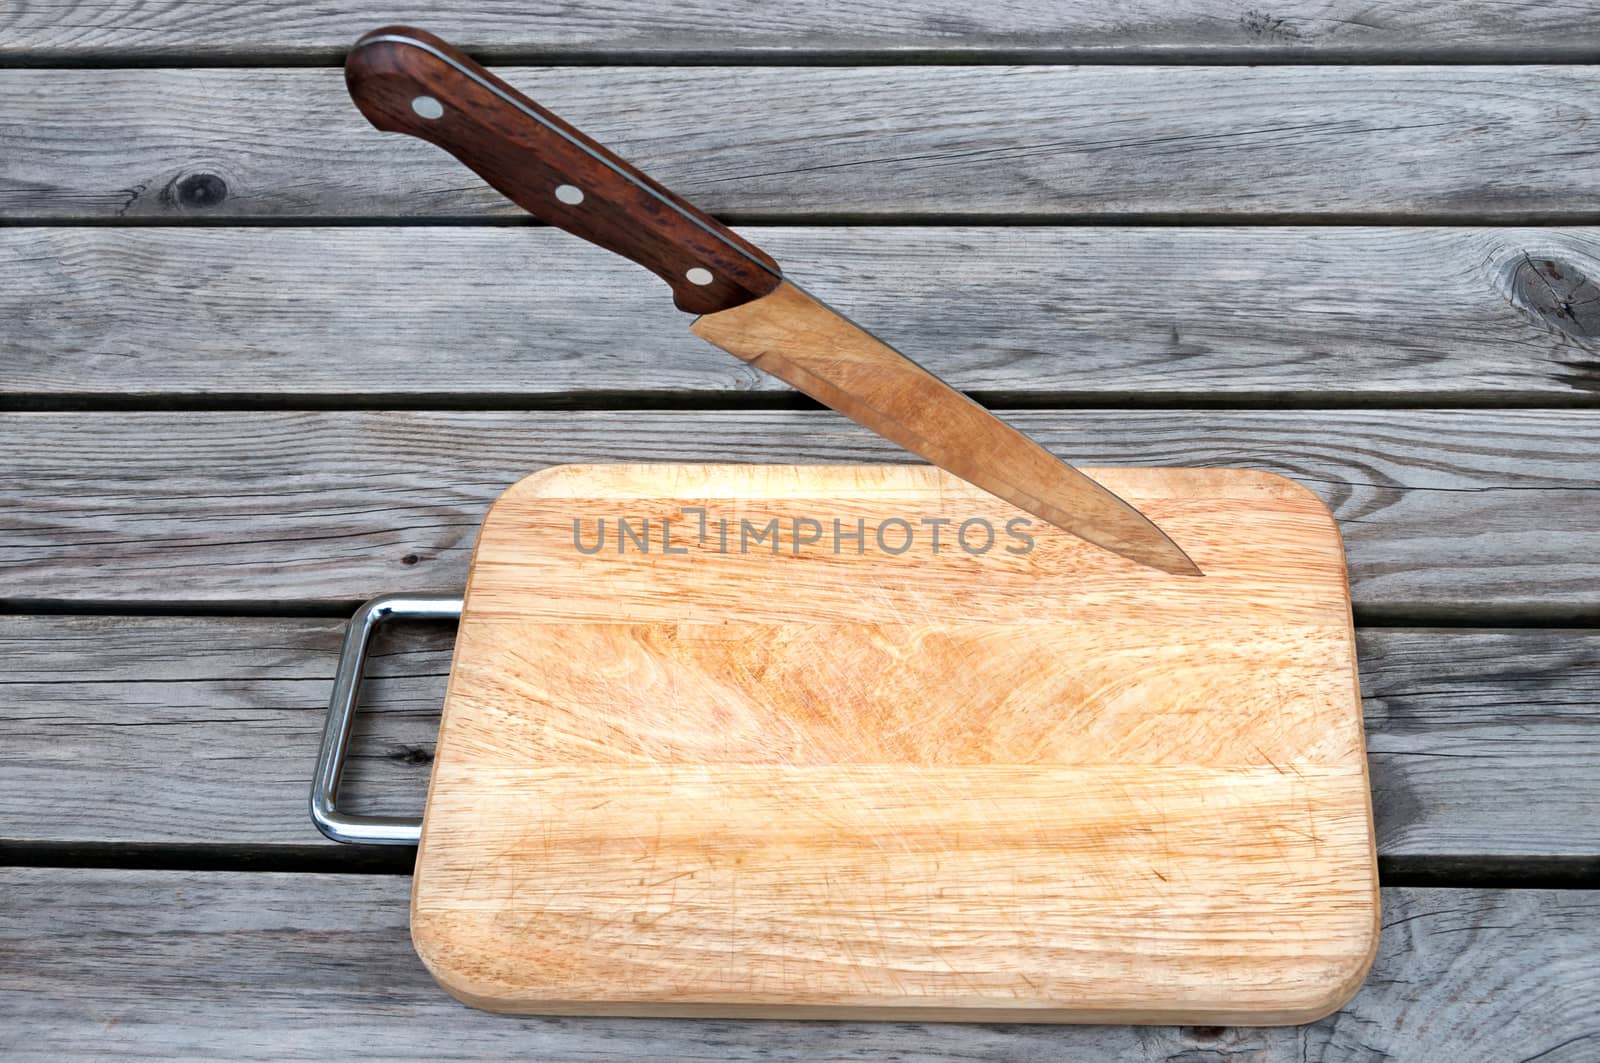 Steel knife and cutting board by zeffss